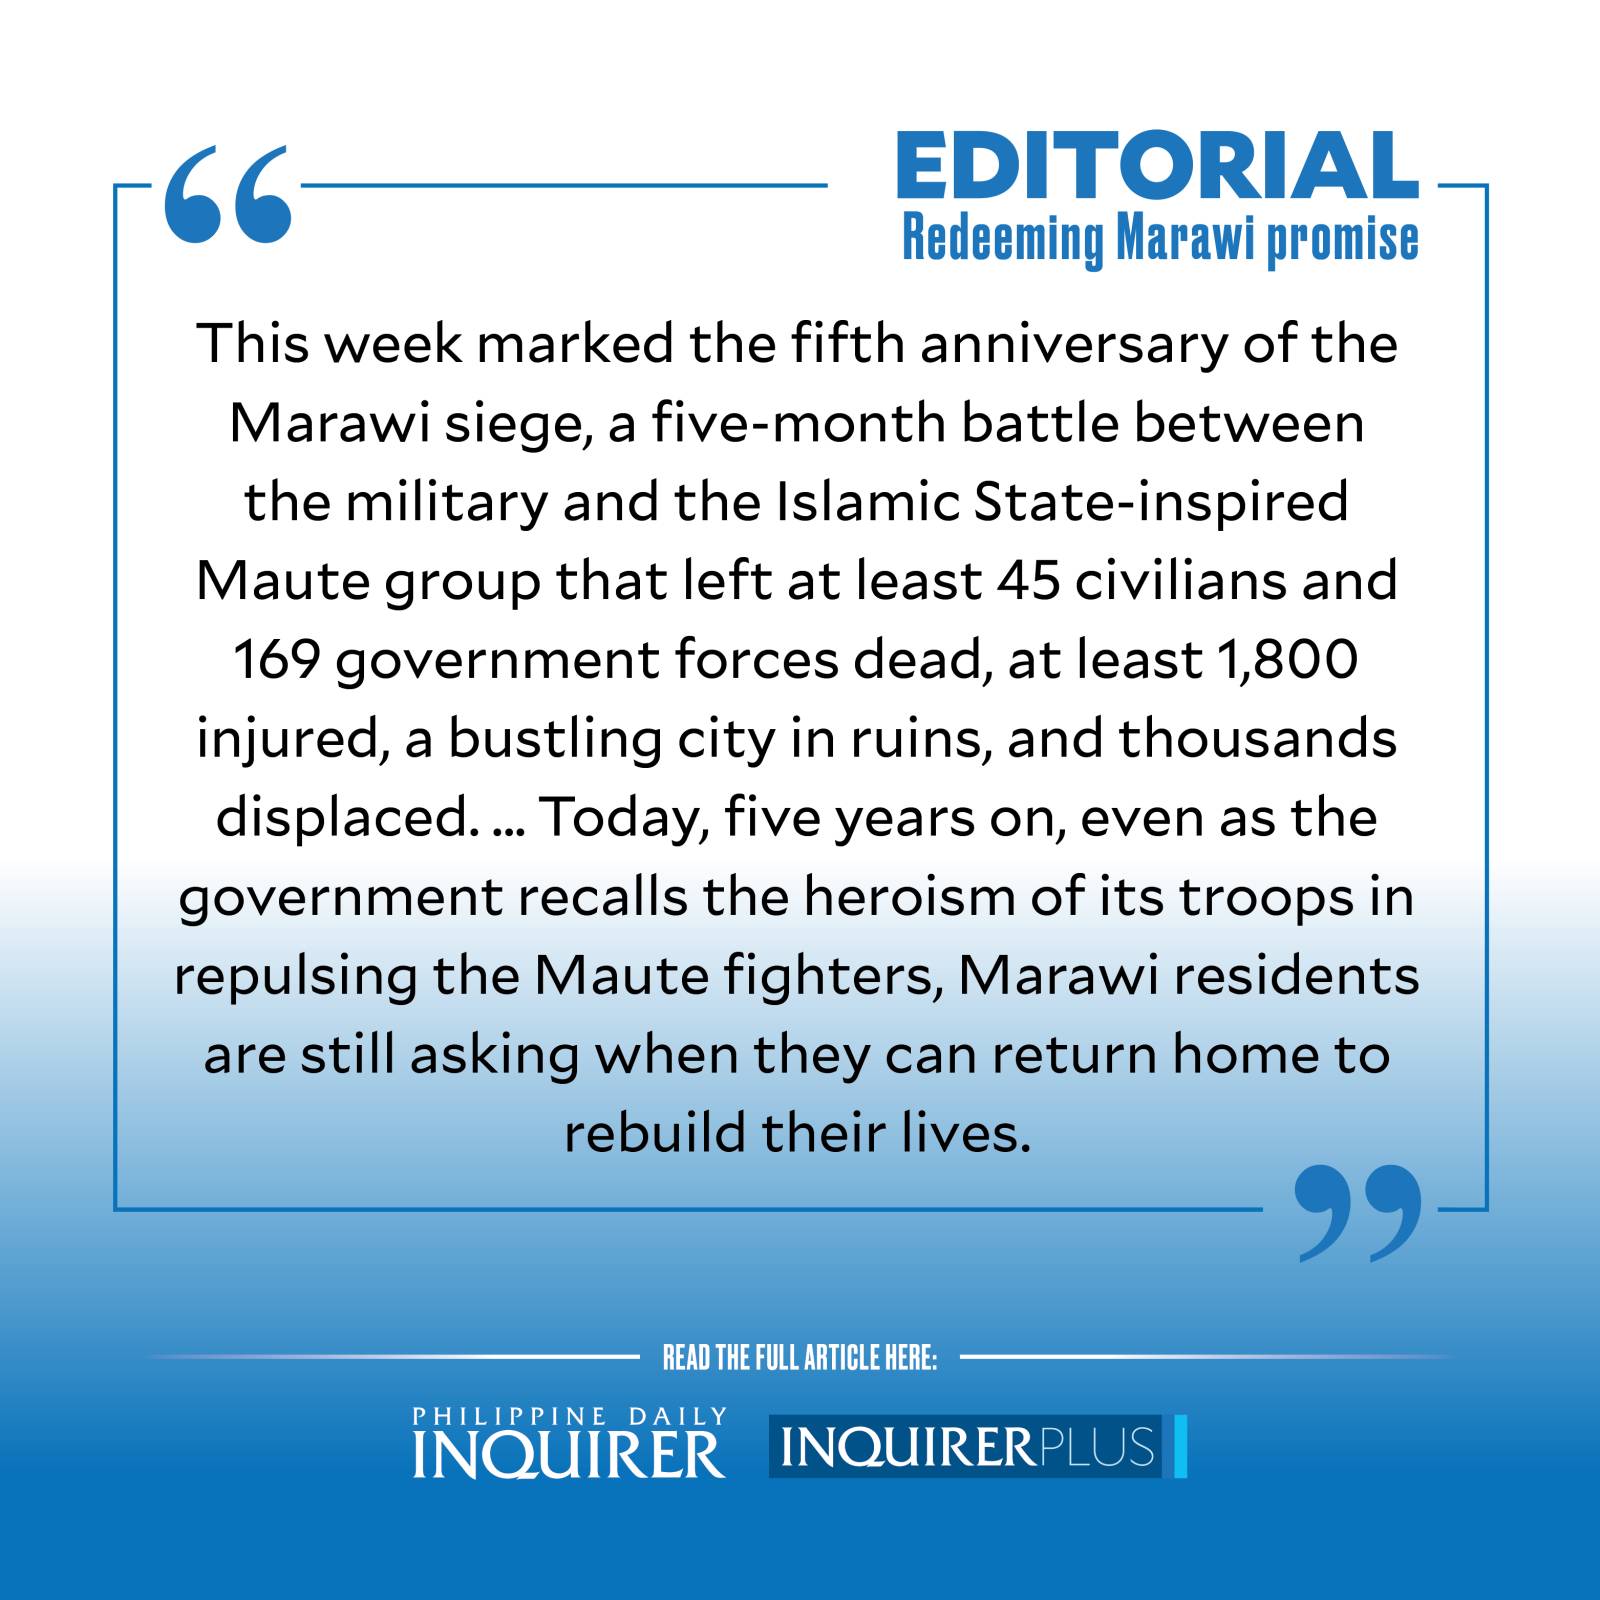 Redeeming Marawi promise